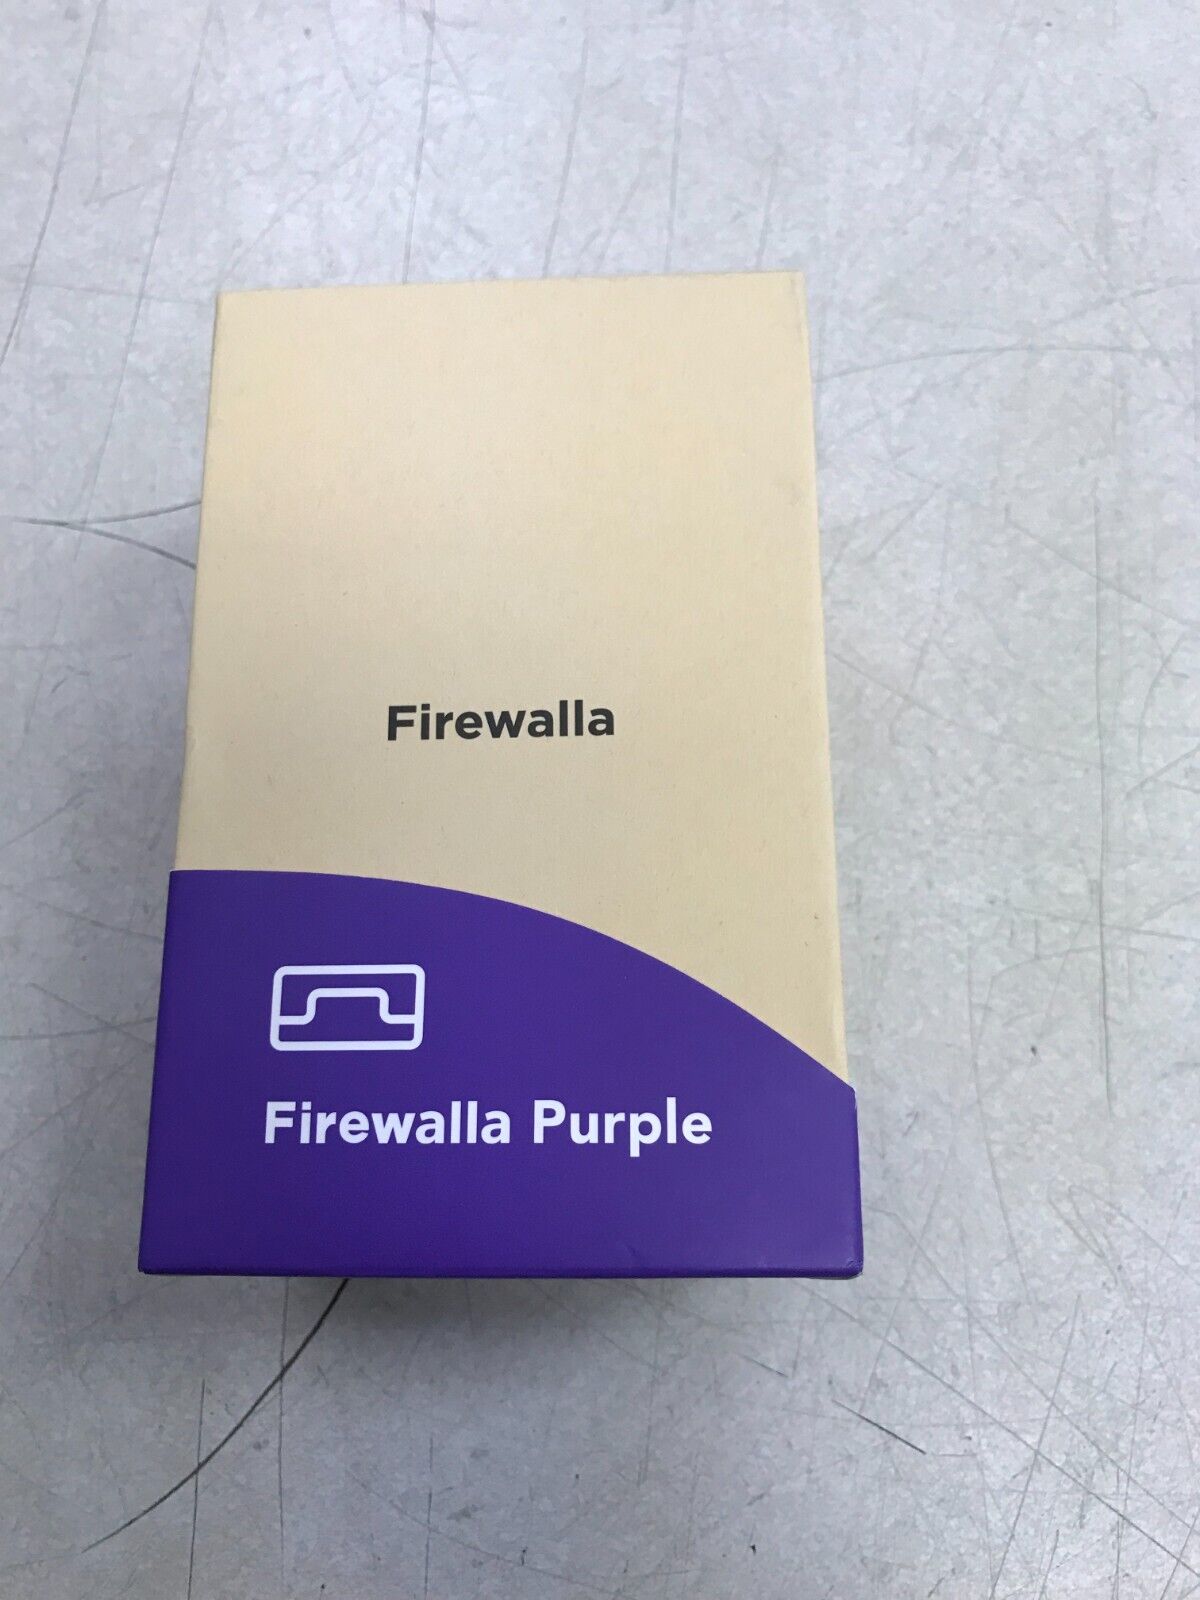 Firewalla Purple: Gigabit Cyber Security Firewall & Router with WiFi